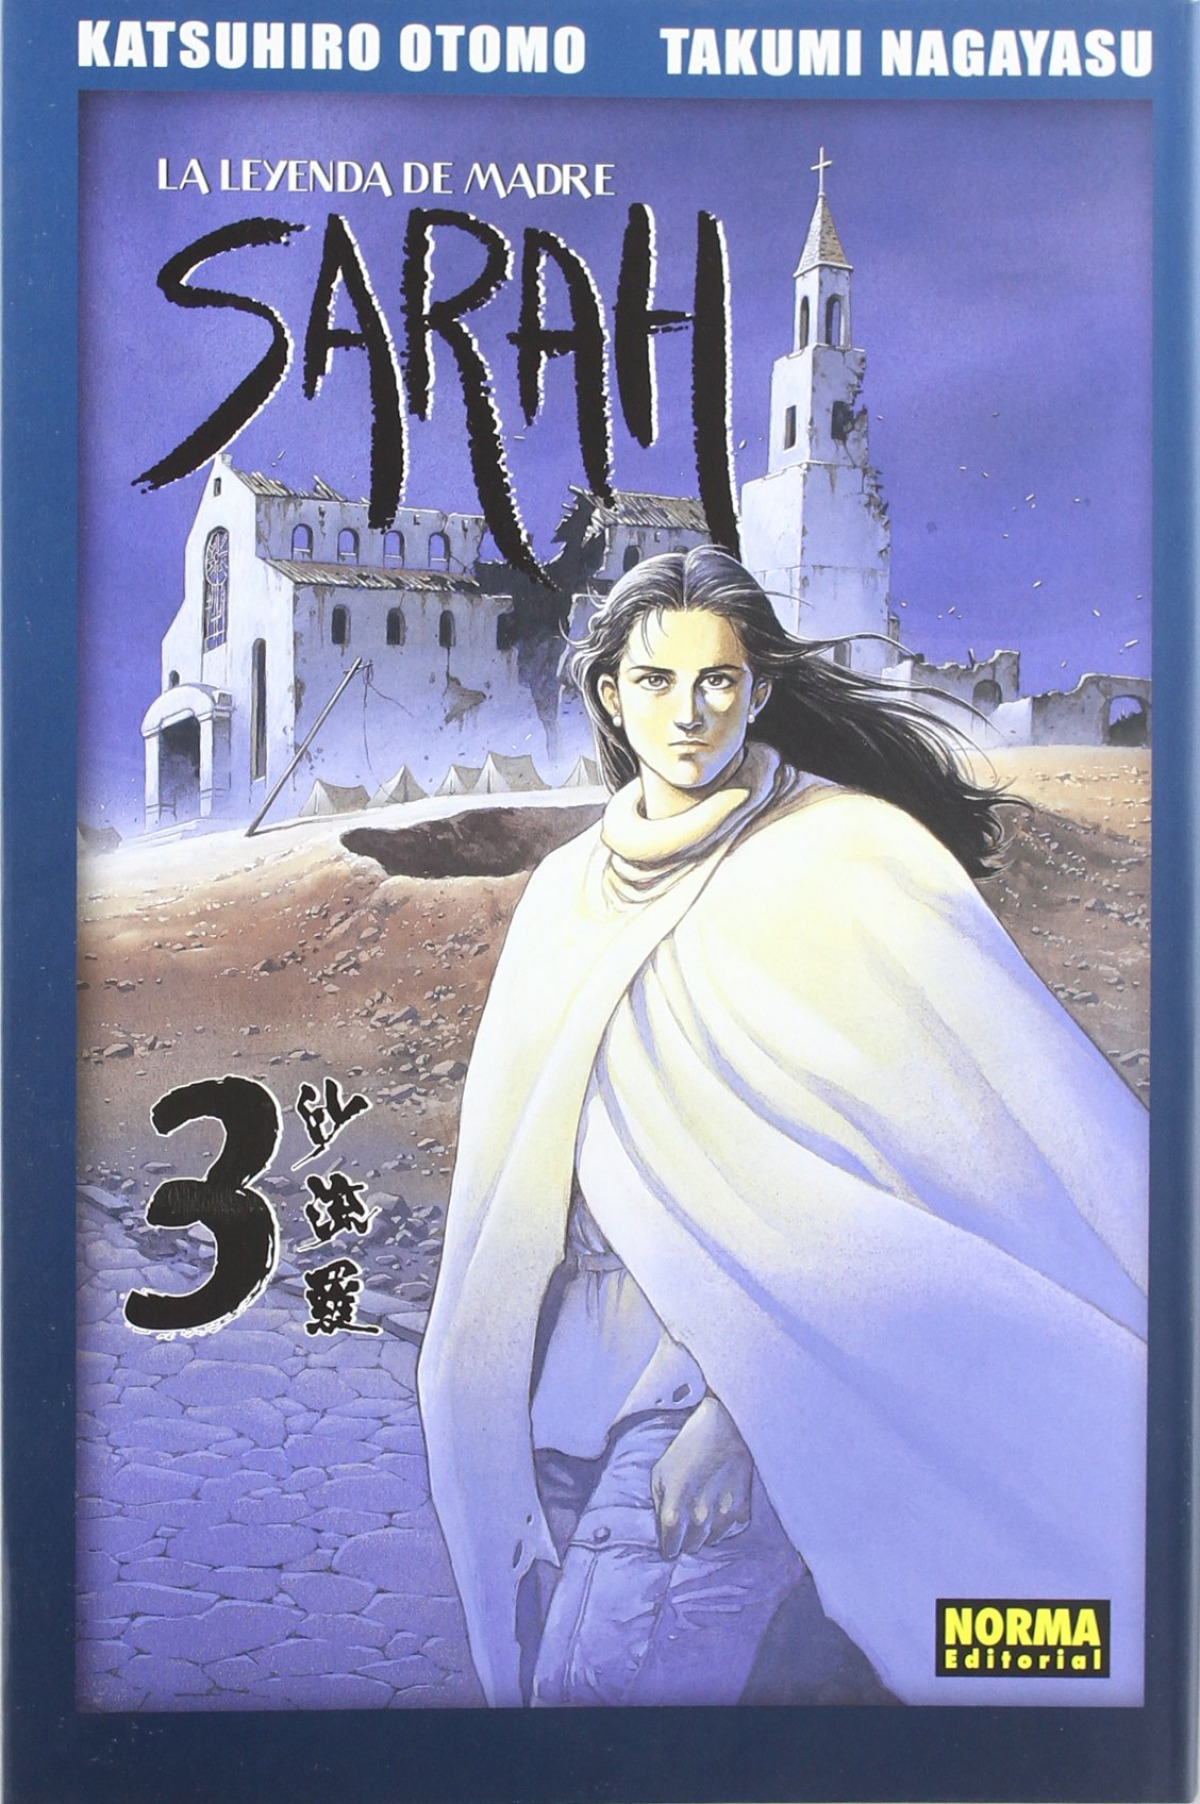 La leyenda de madre sarah 3 ed. coleccionista - Otomo, Katsuhiro/Nagayasu, Takumi